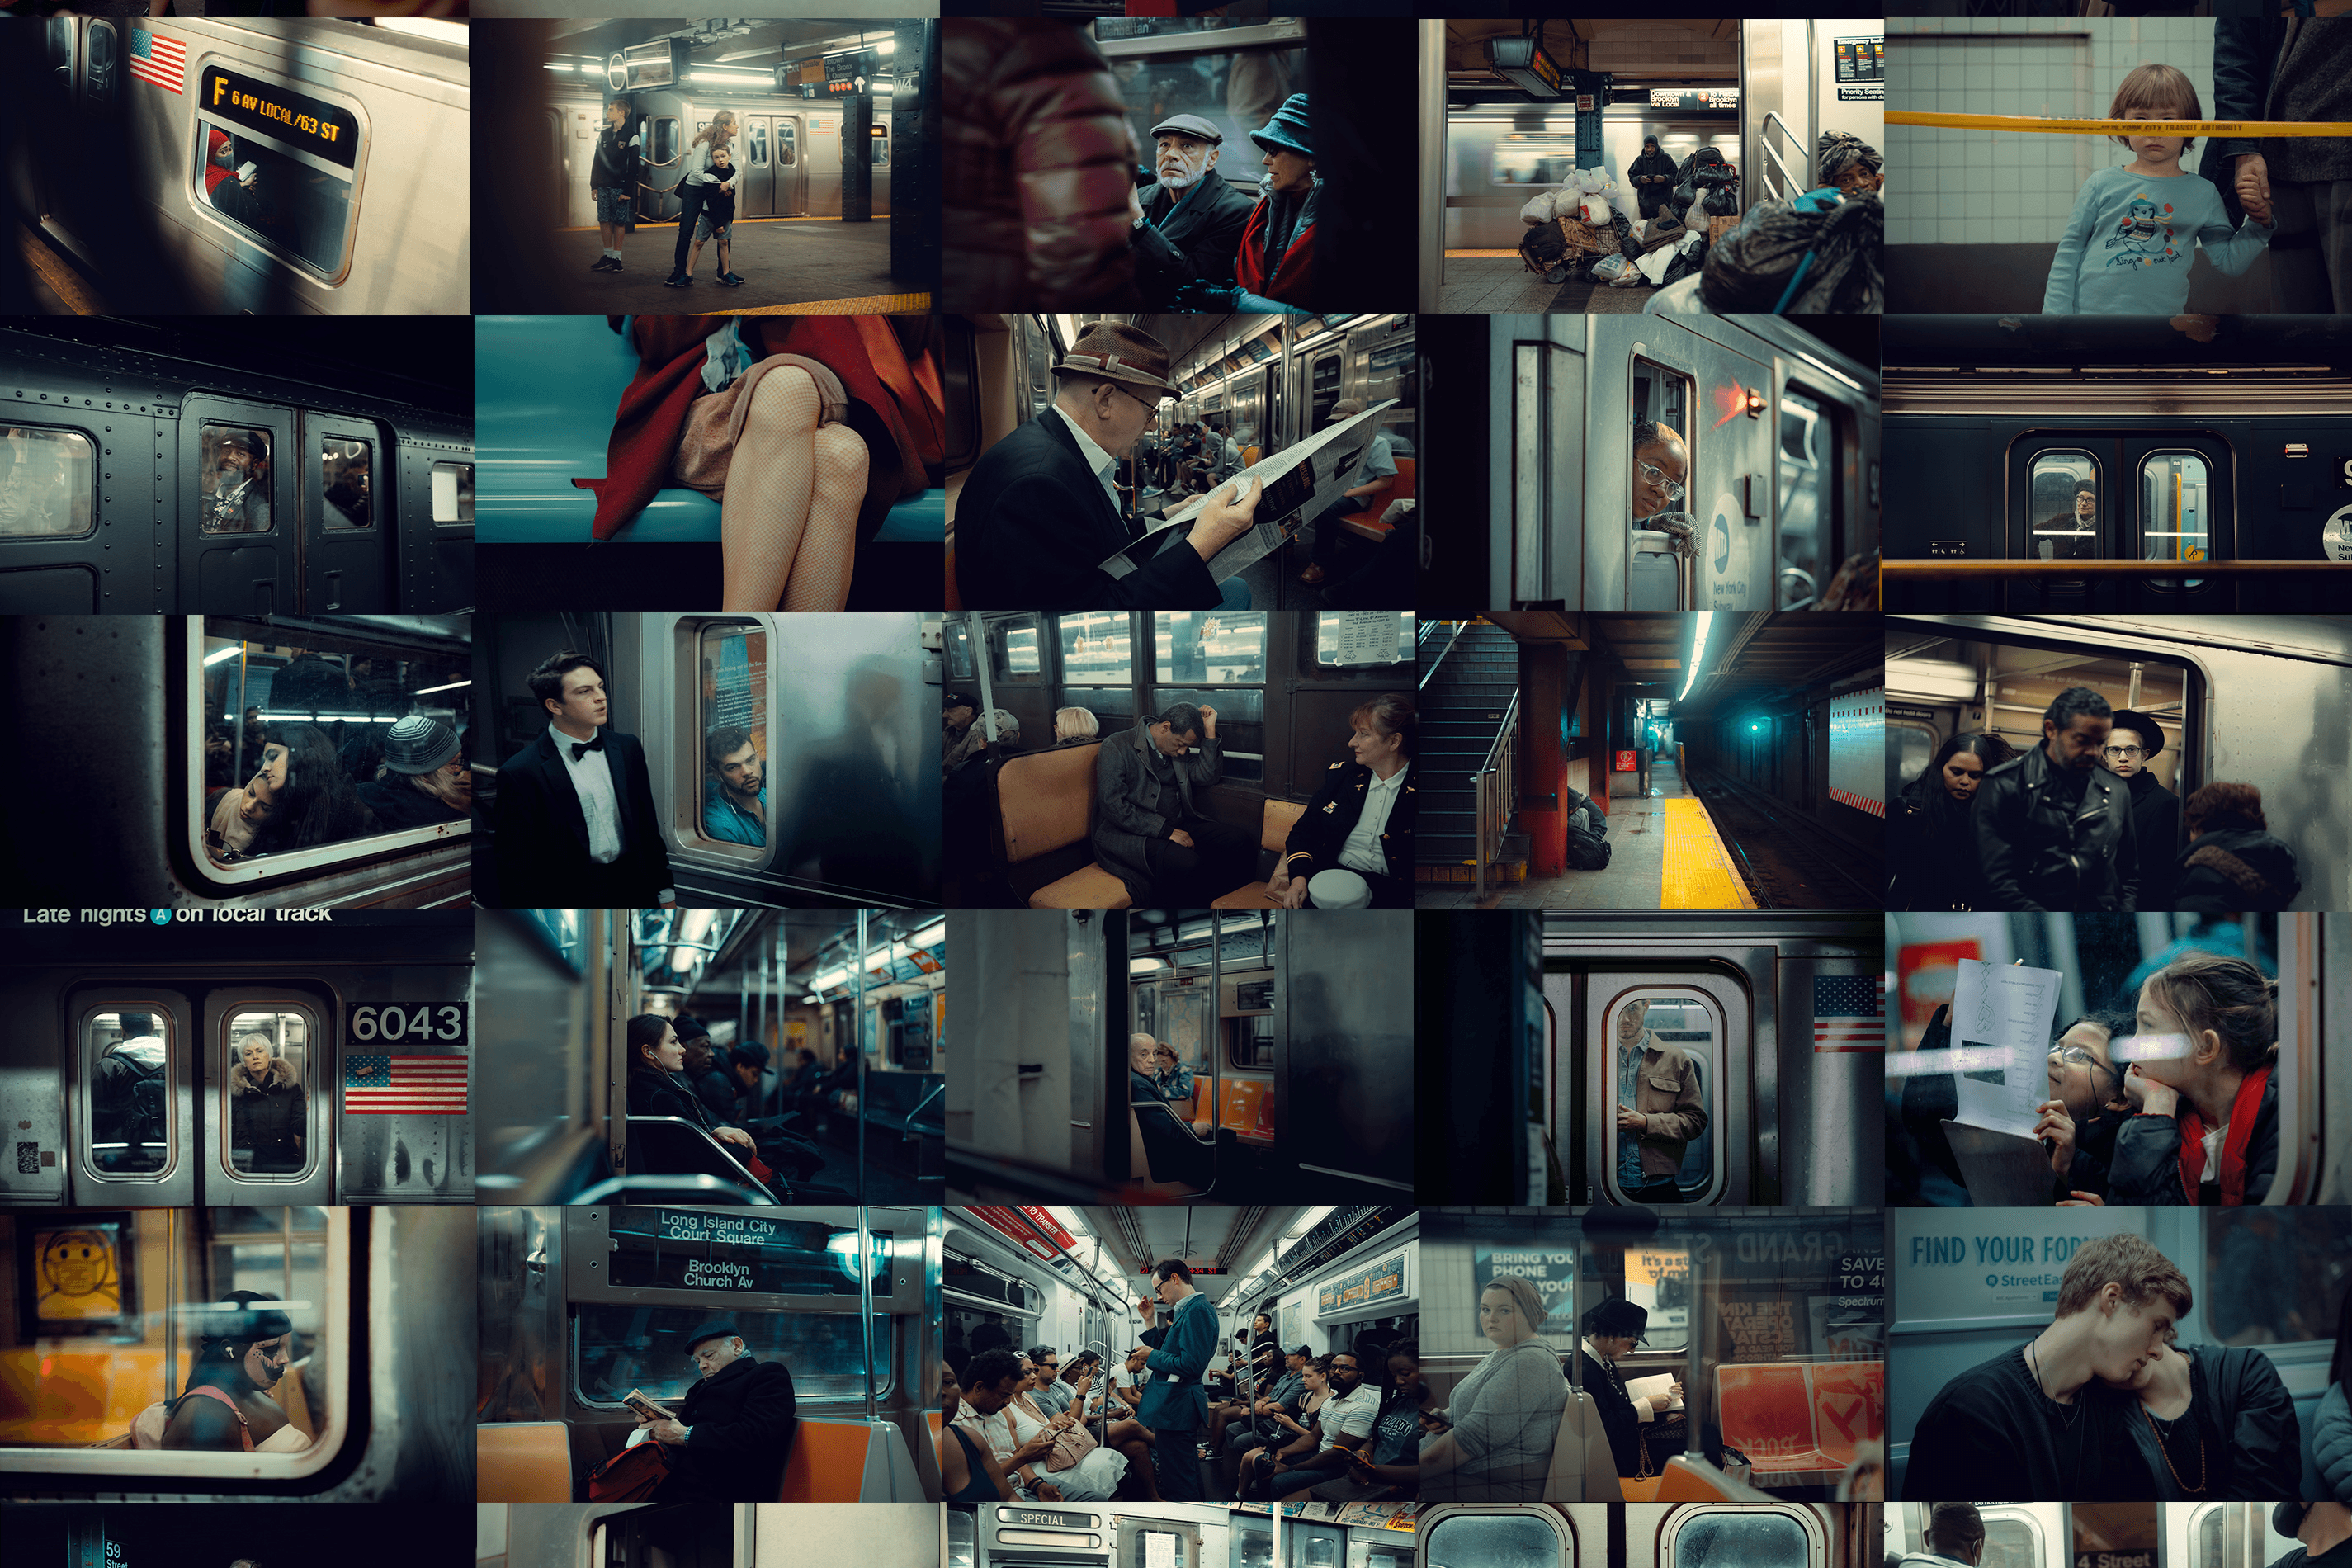 NYC Underground Stories by Monaris